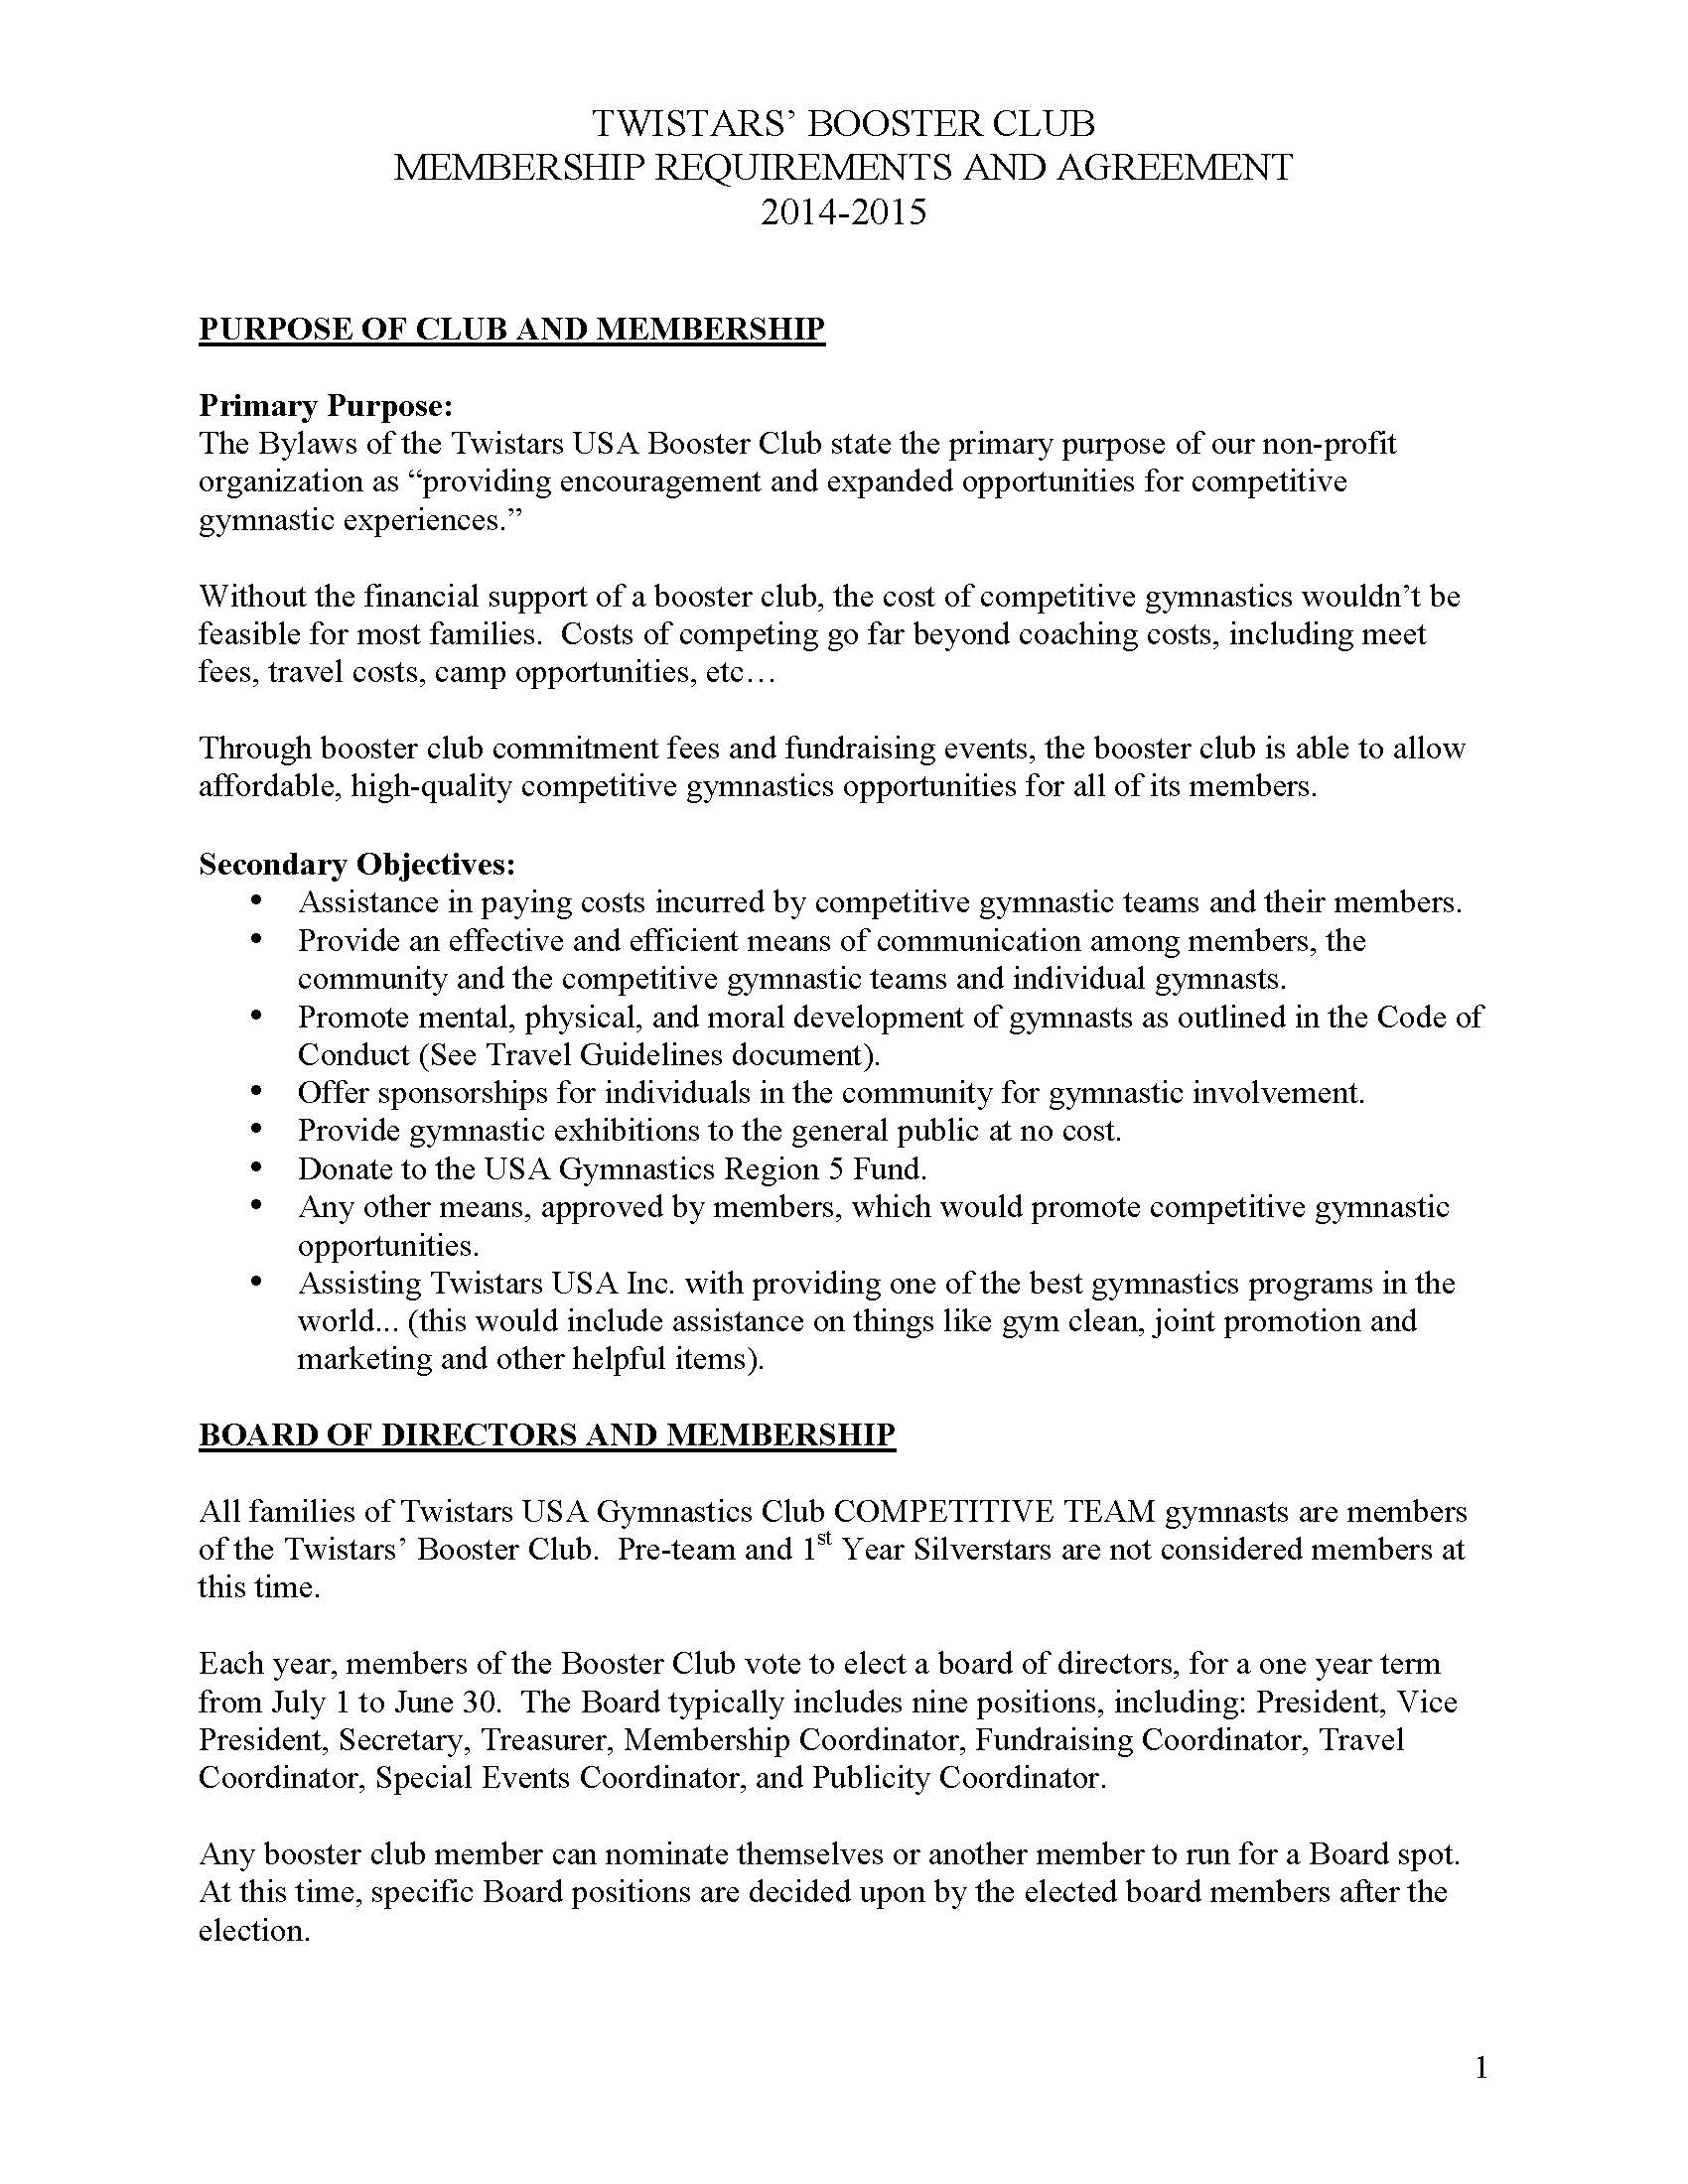 TGBC agreement 2014-2015_Page_1